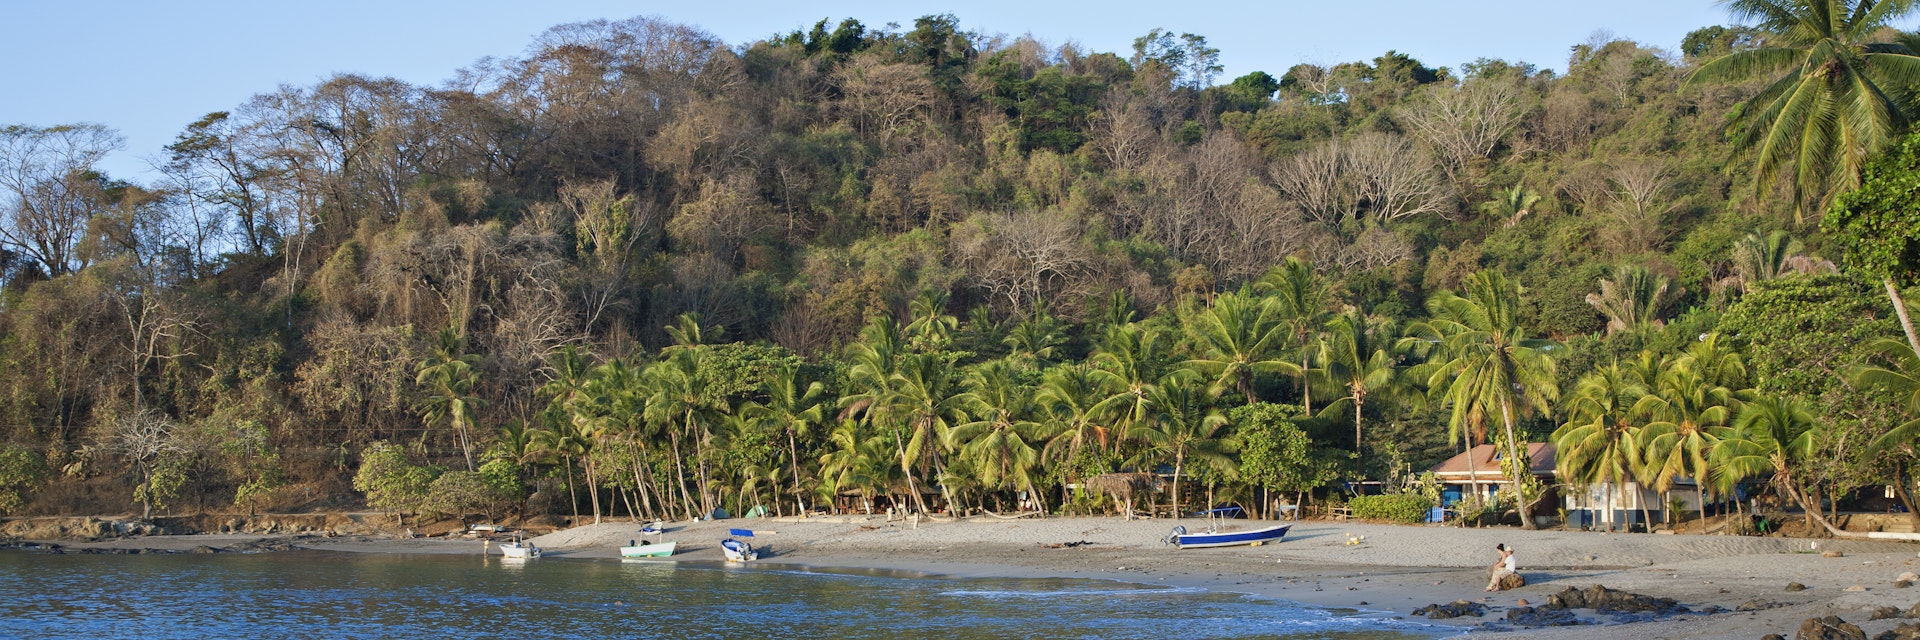 The beach at Montezuma, Costa Rica.